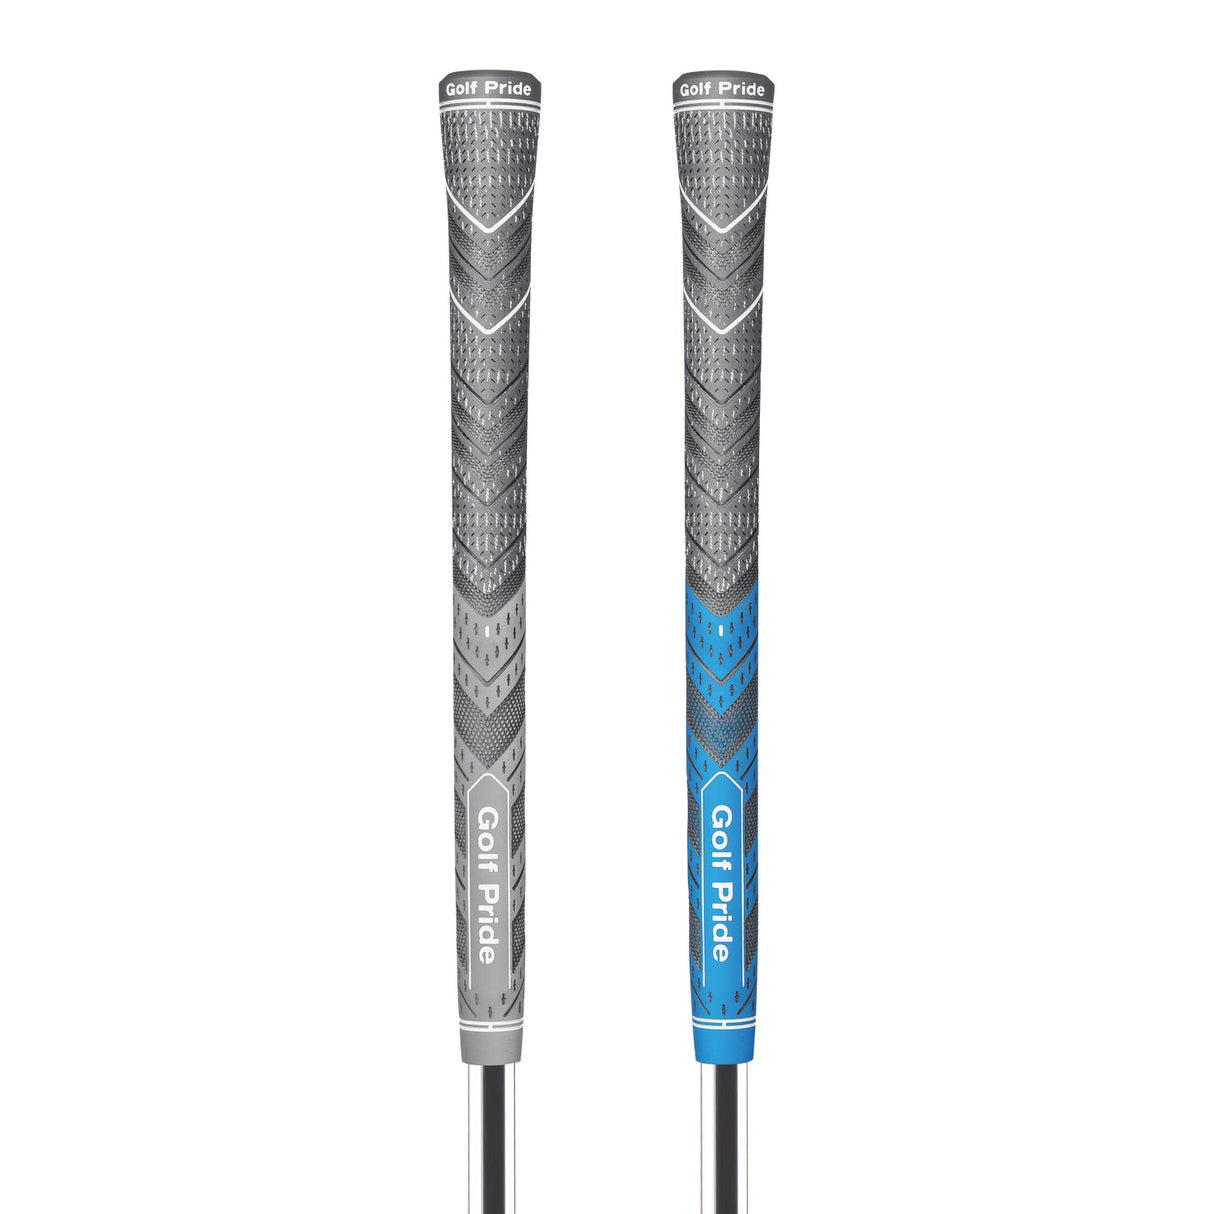 Golf Pride MCC PLUS4 Midsize Golf Grips (10pc Grip Bundle Set)